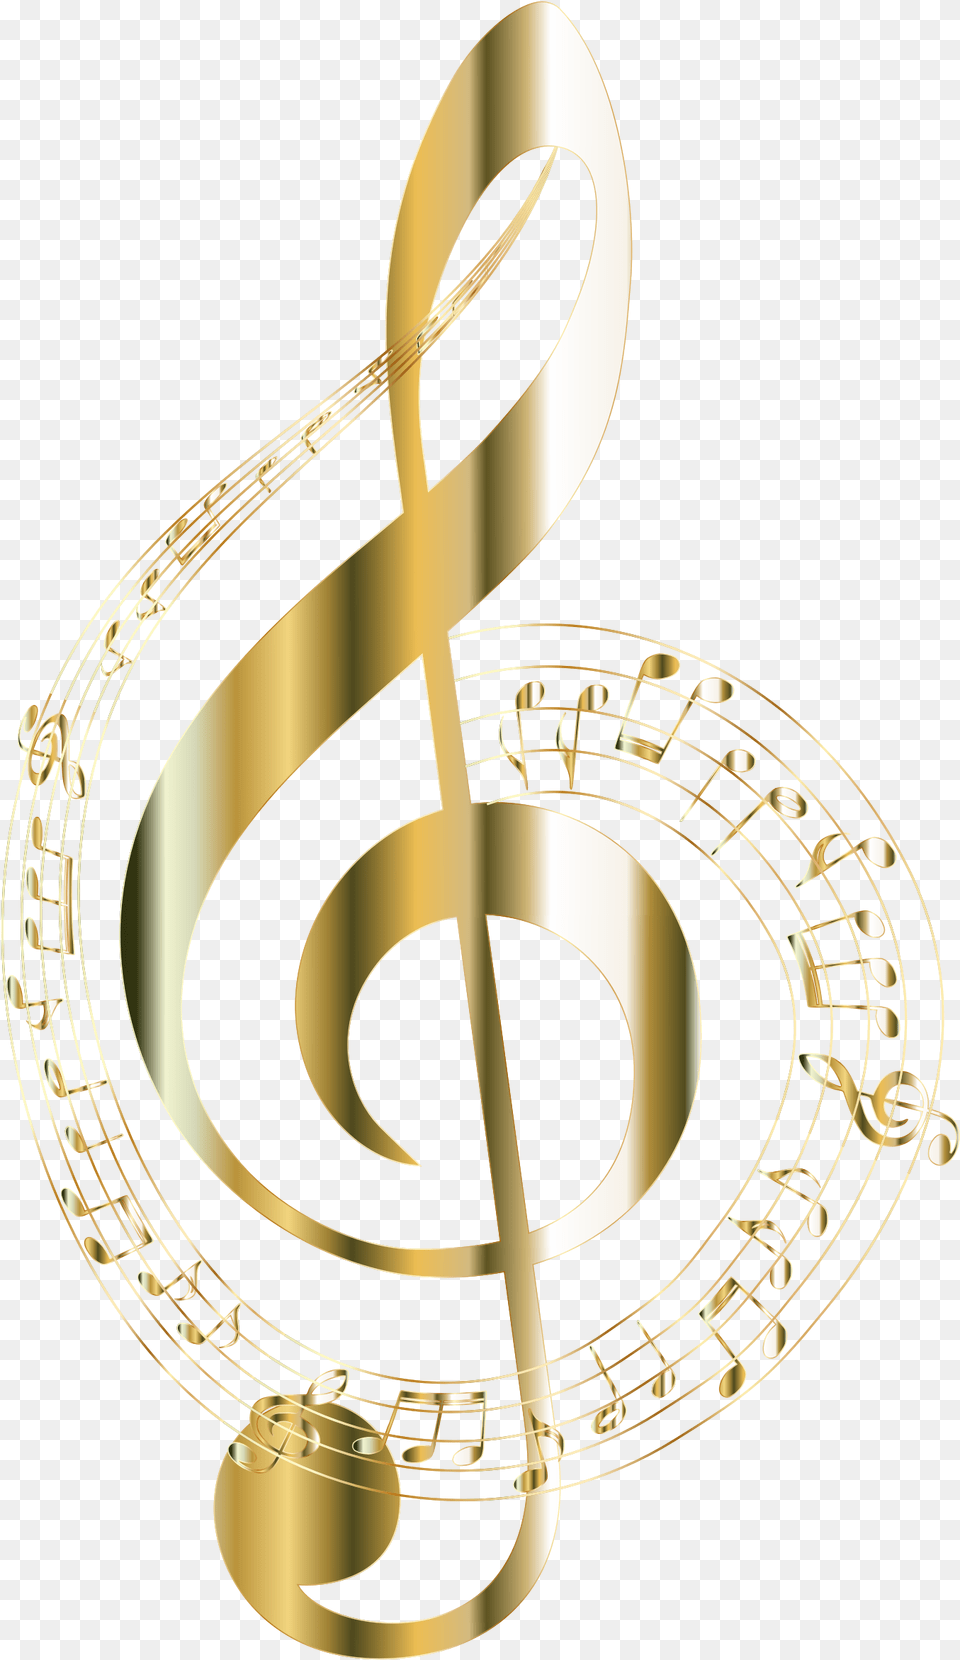 Gold Music Notes 4 Transparent Background, Sundial, Festival, Hanukkah Menorah, Symbol Free Png